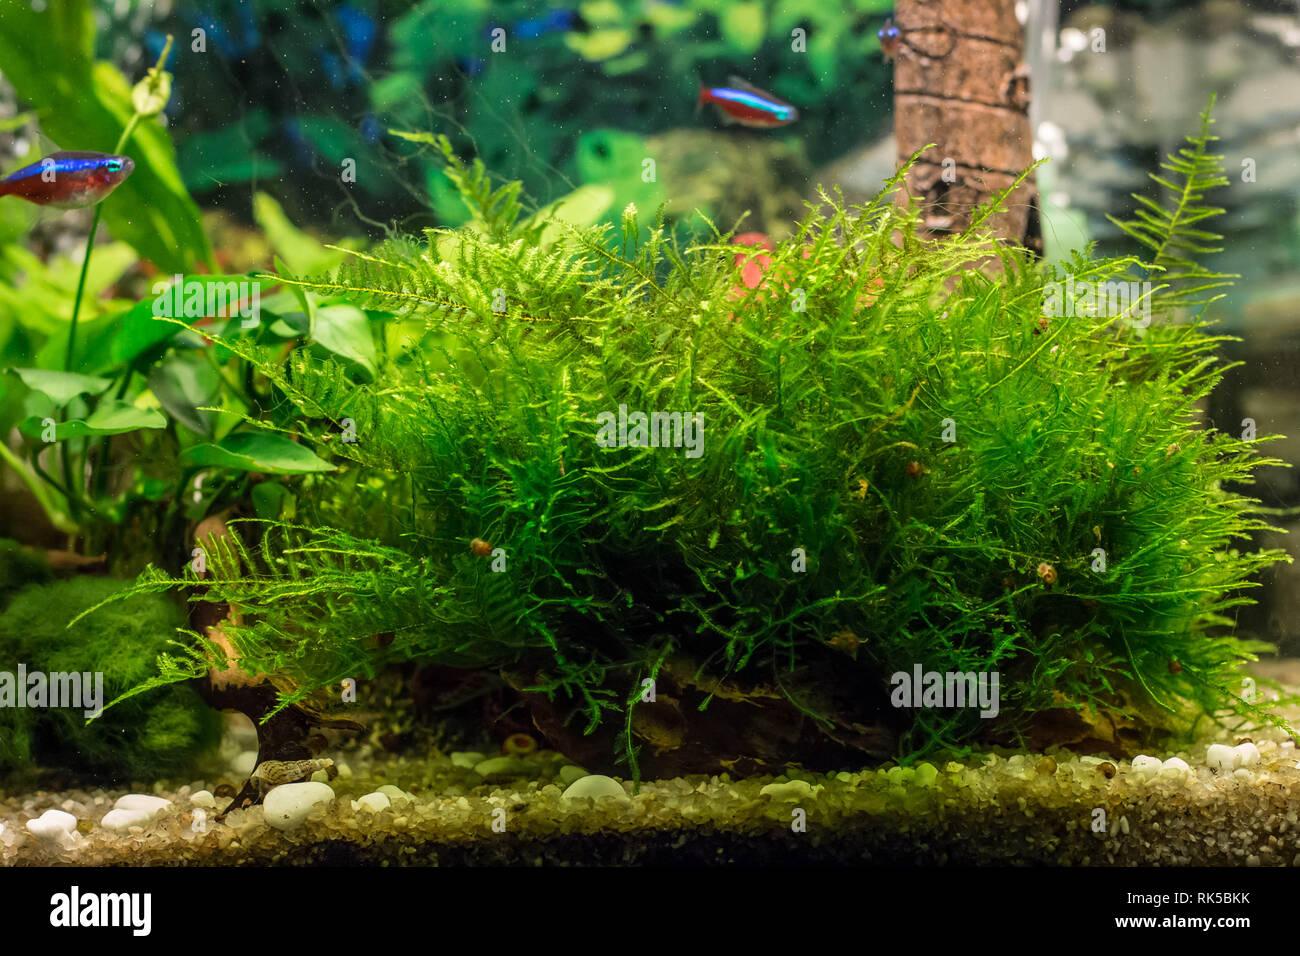 turf-of-java-moss-latin-name-vesicularia-in-aquarium-RK5BKK.jpg